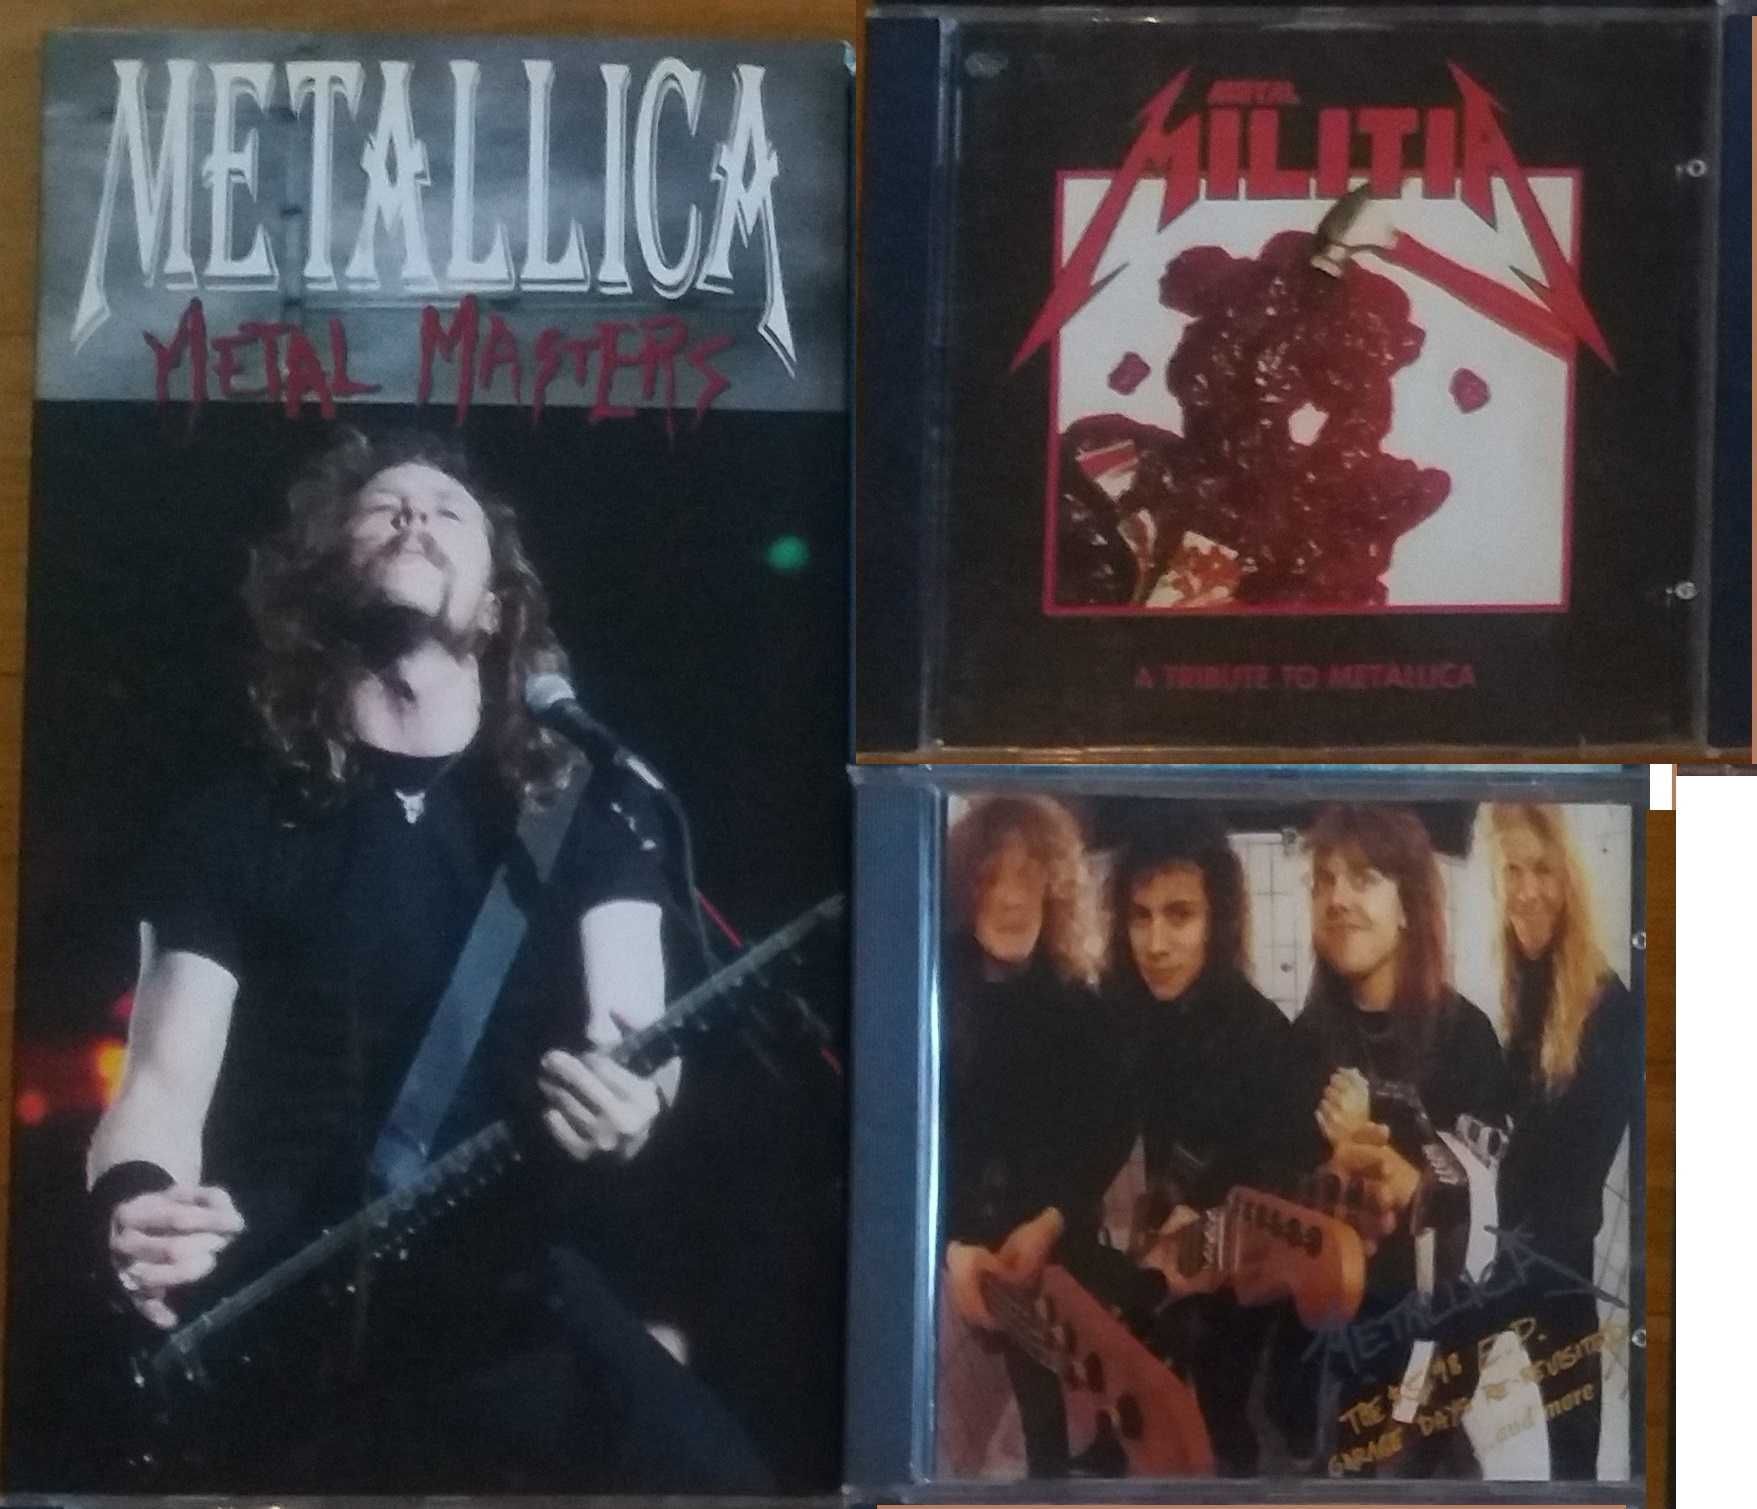 Metallica moonspell nephilim red hot chilli peppers et al cds raros